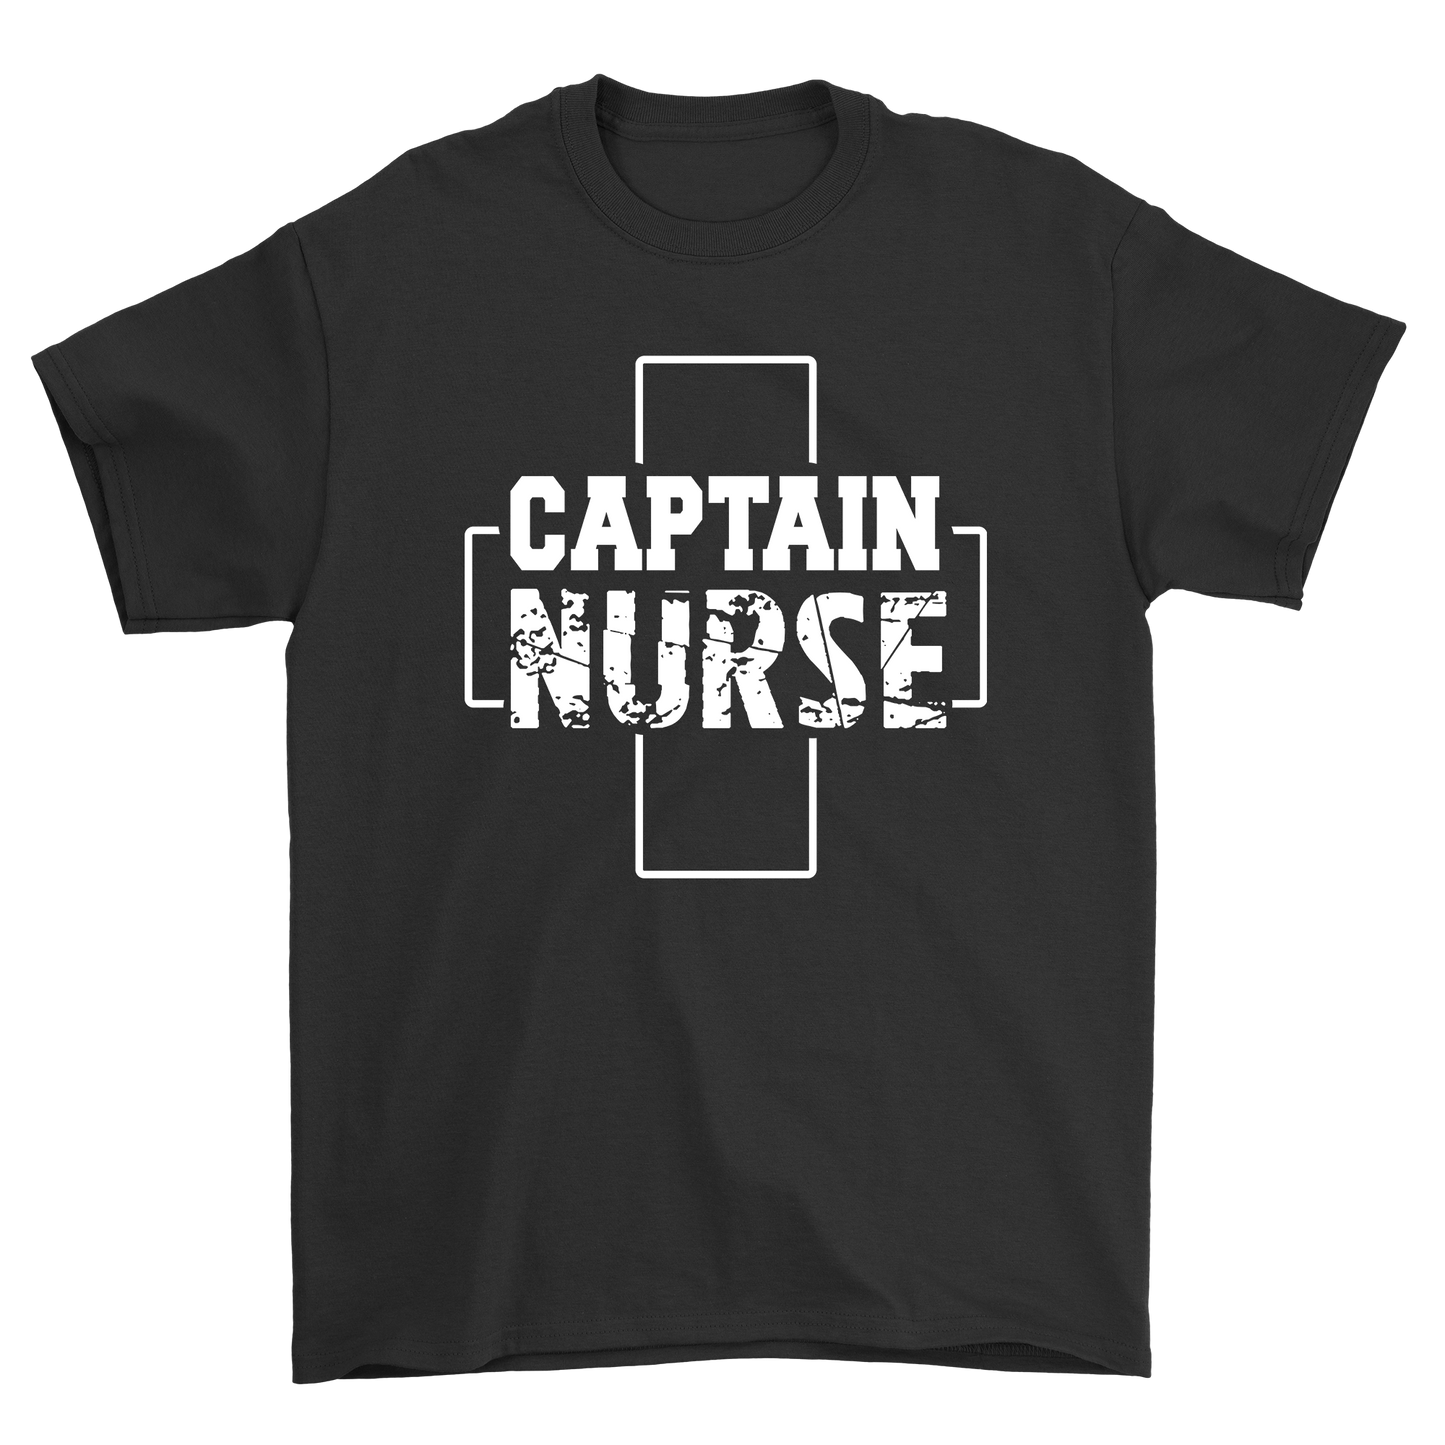 Captain Nurse t-shirt - Premium t-shirt from MyDesigns - Just $21.95! Shop now at Lees Krazy Teez